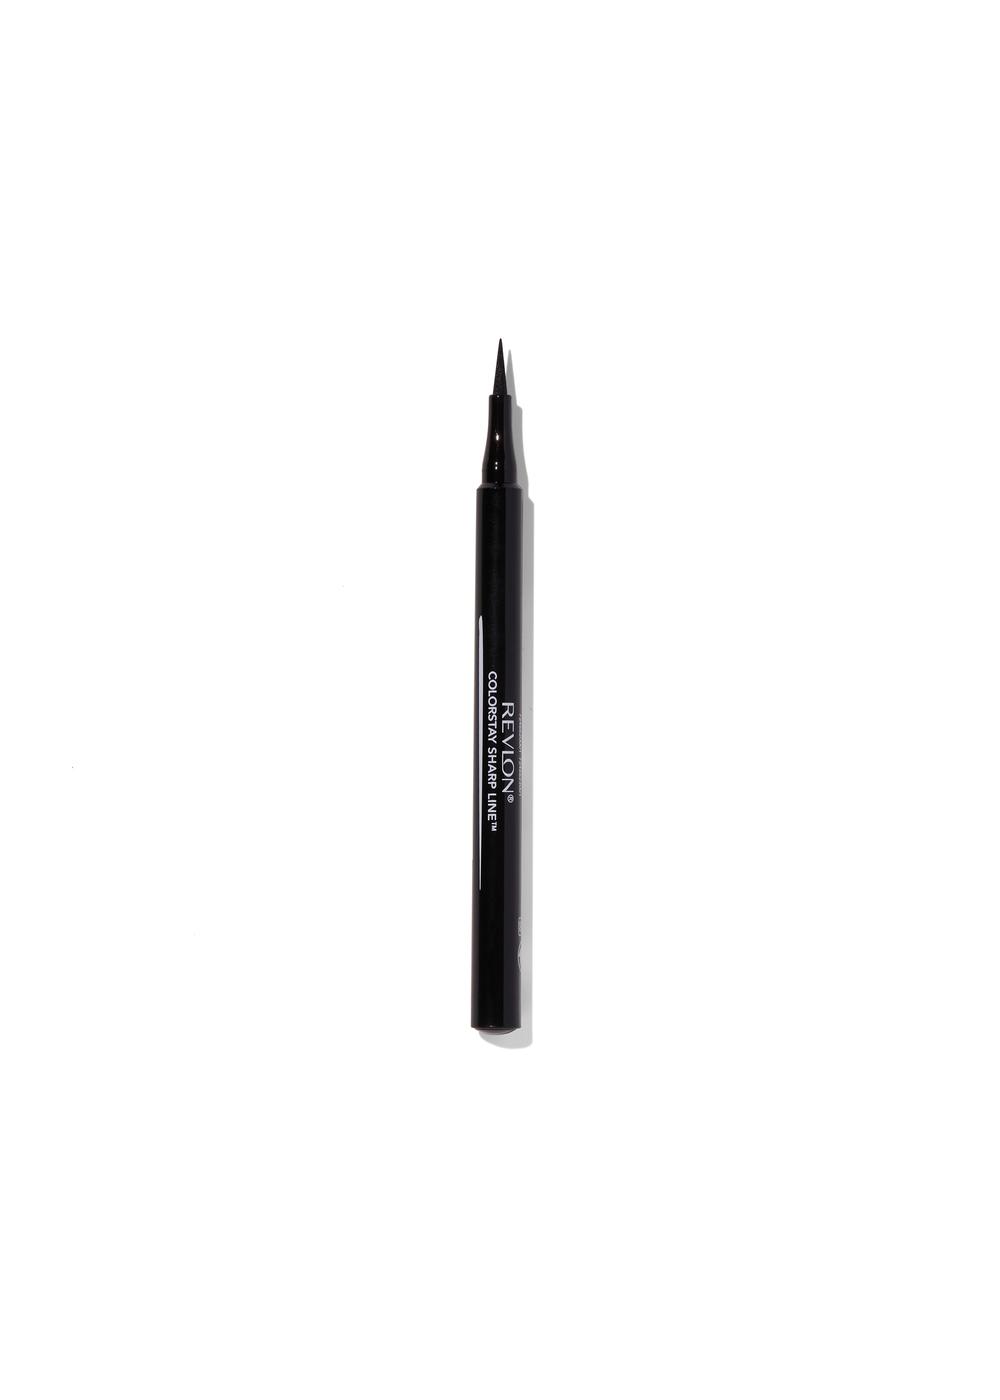 Revlon ColorStay Sharp Line Liquid Eye Pen; image 3 of 3